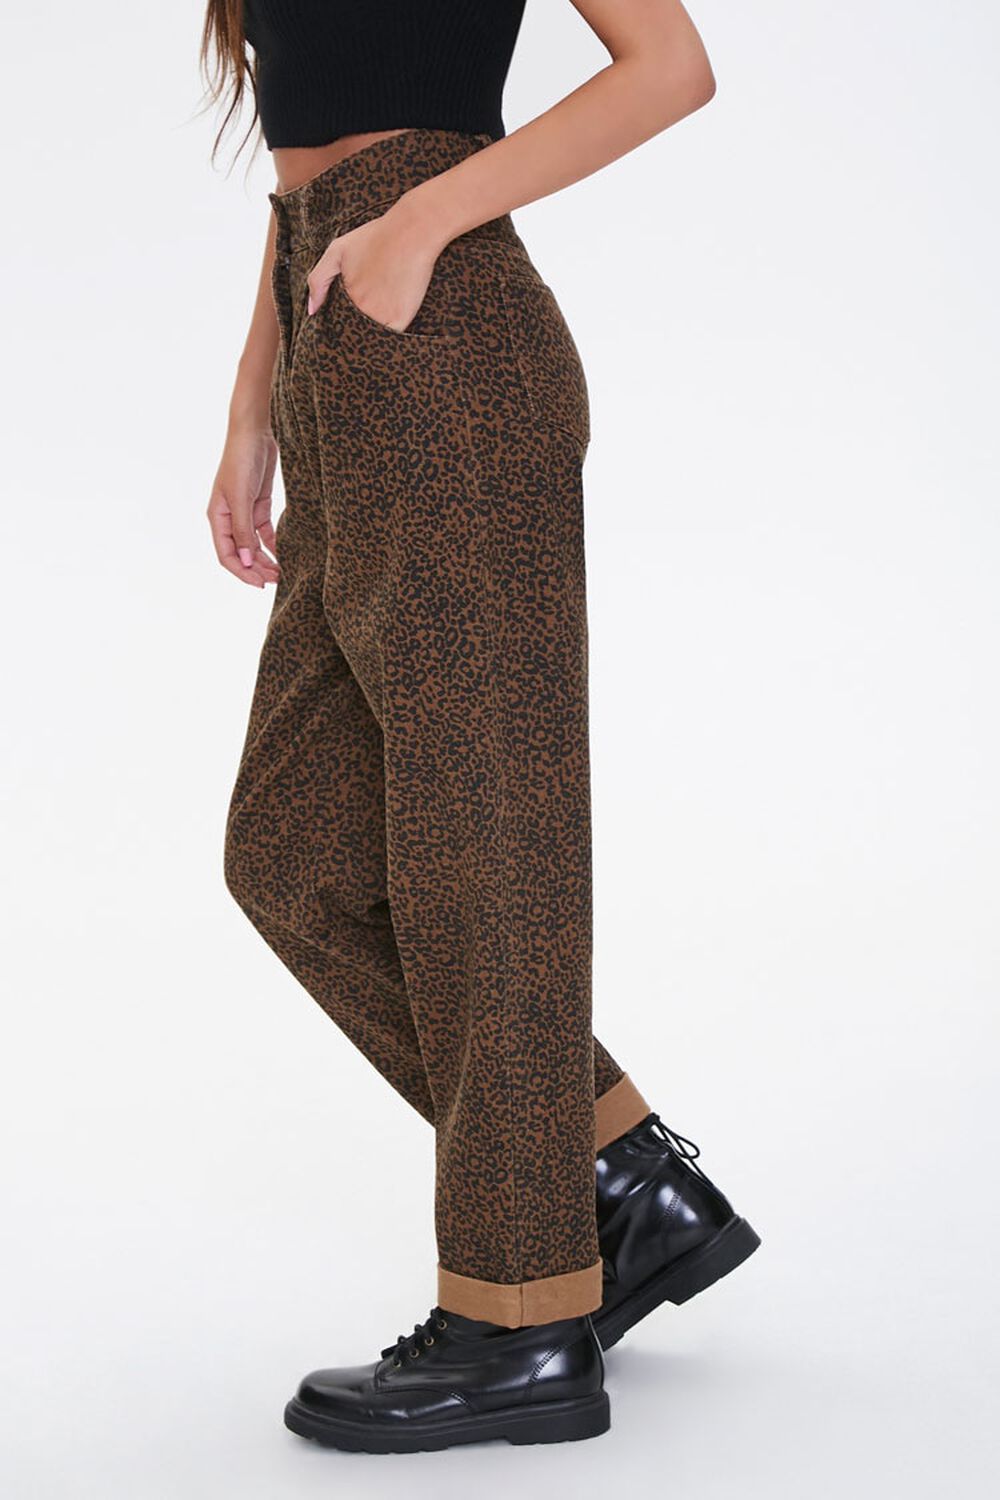 Leopard Print High-Rise Pants